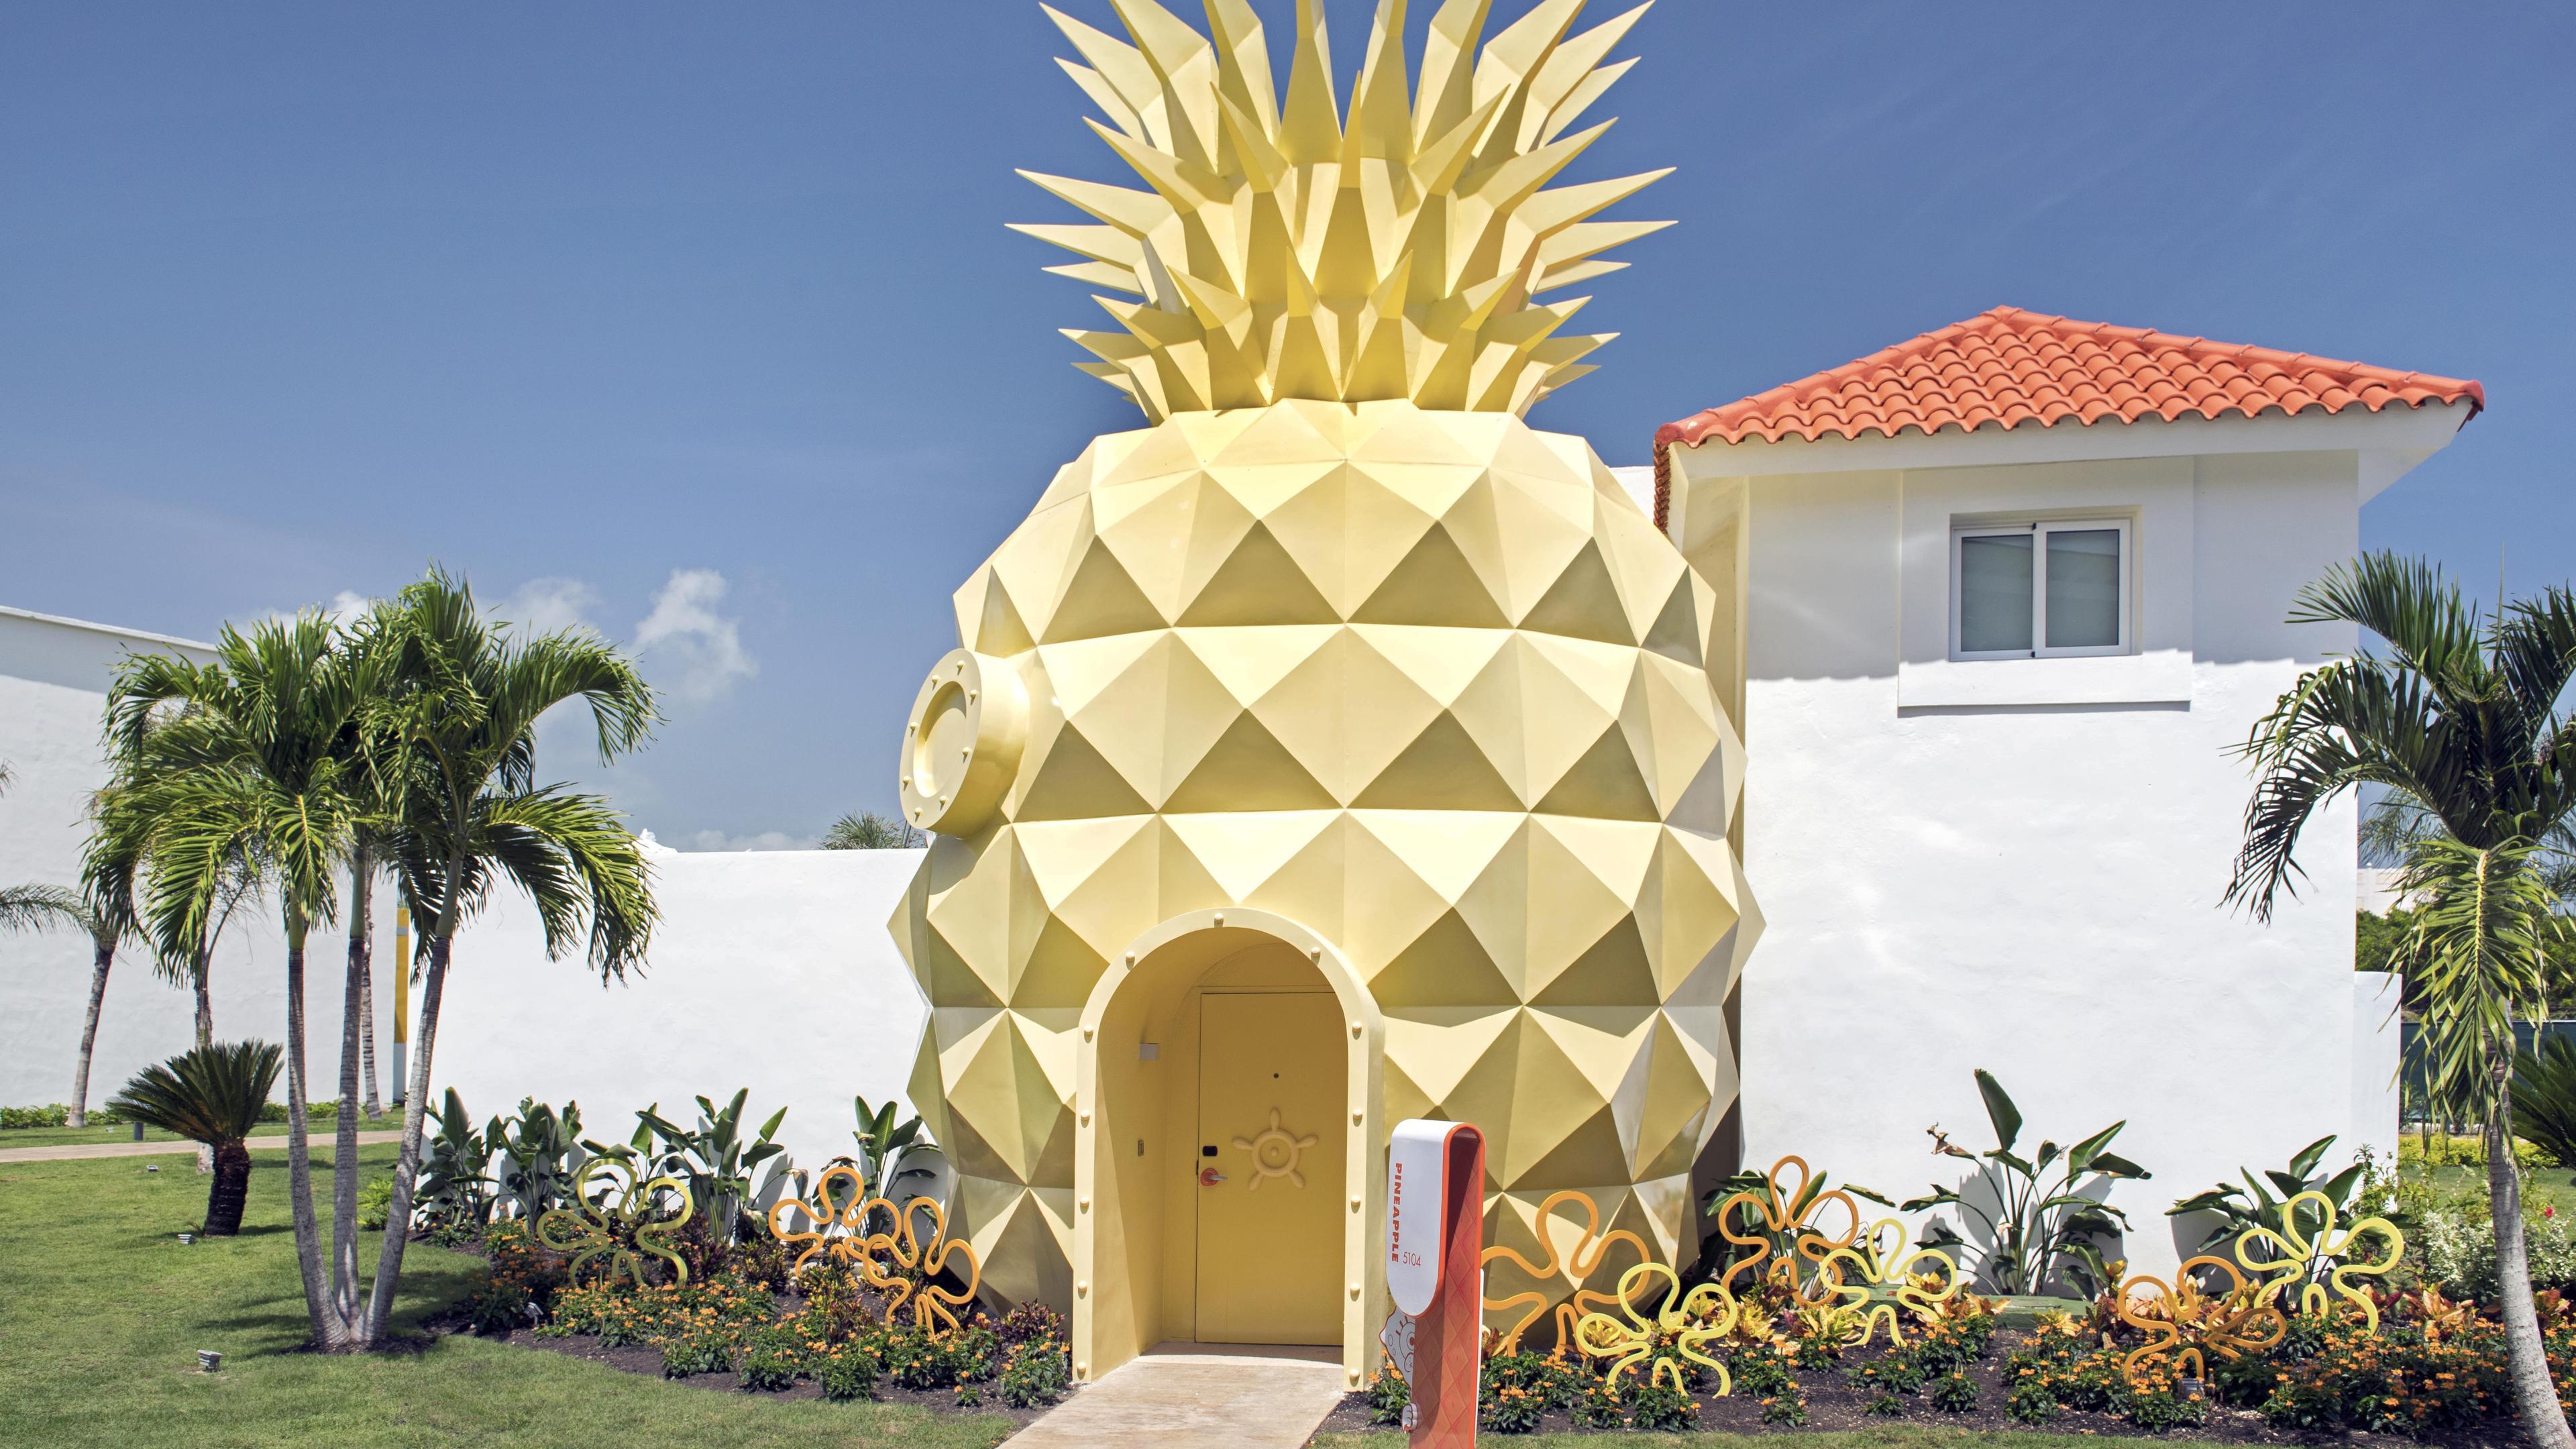 Super Villa pineapple entrance